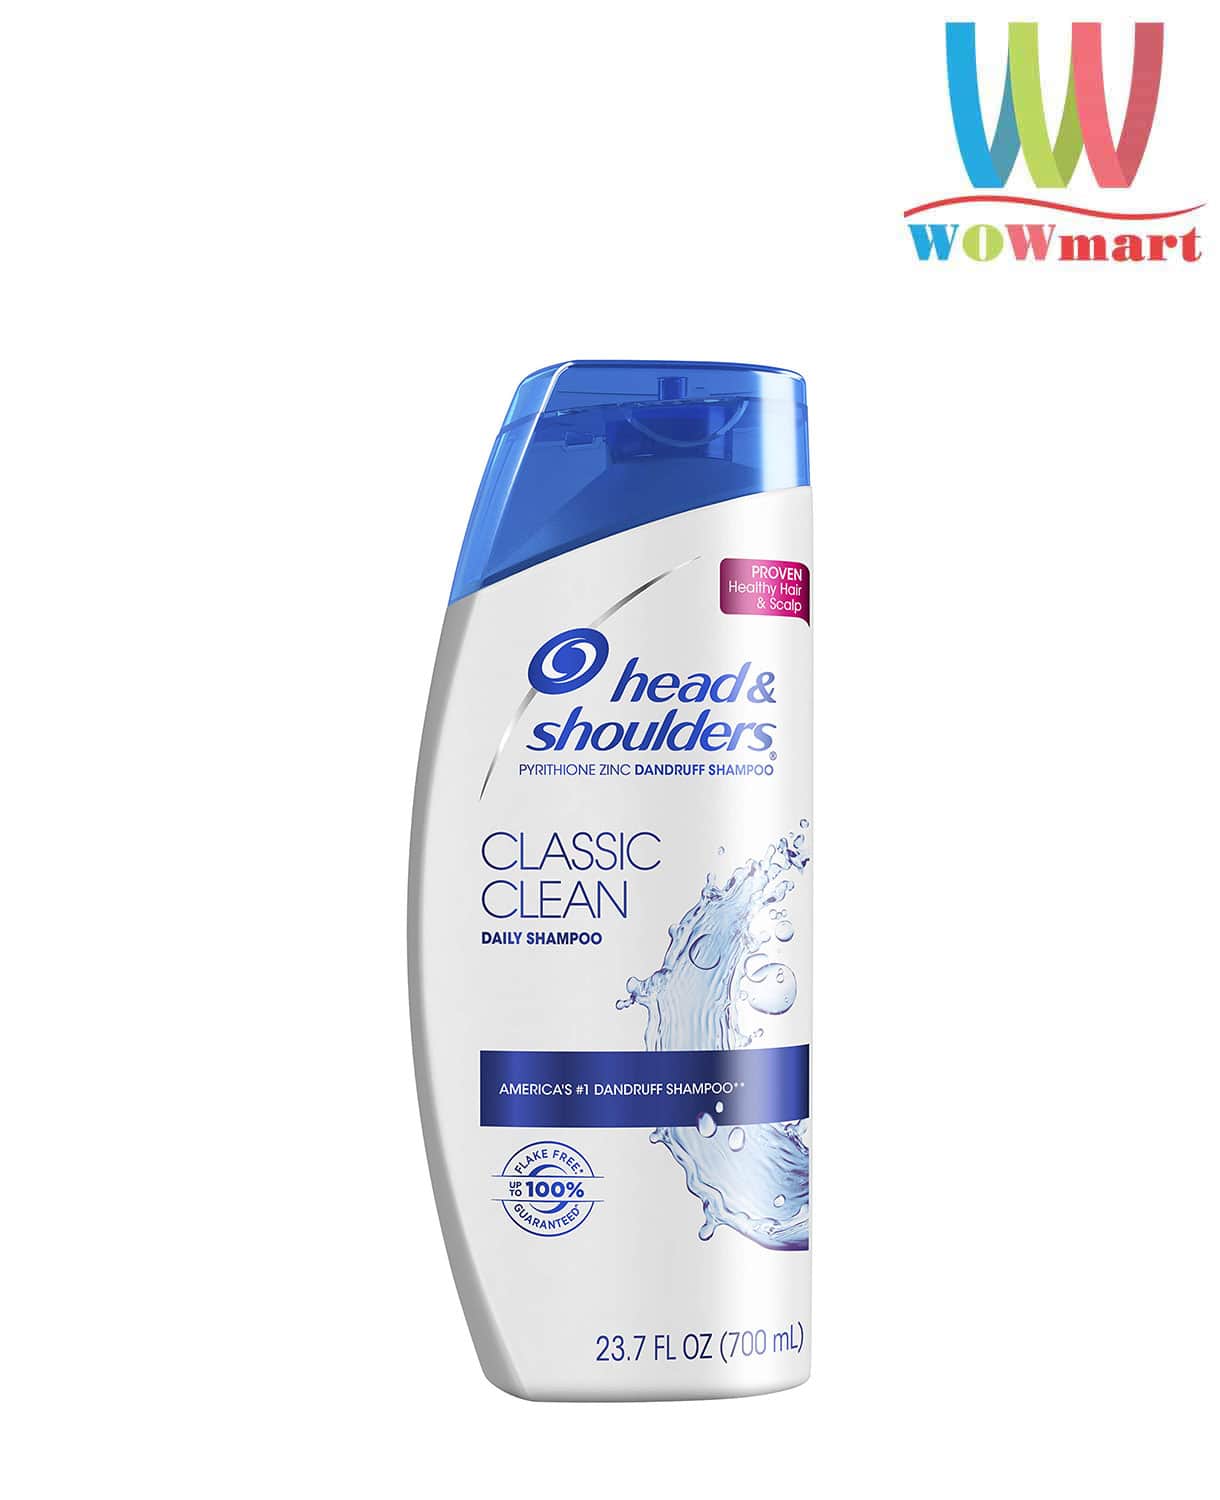 Dầu gội Head & Shoulders Classic Clean Daily Shampoo 700ml – Wowmart VN |  100% hàng ngoại nhập